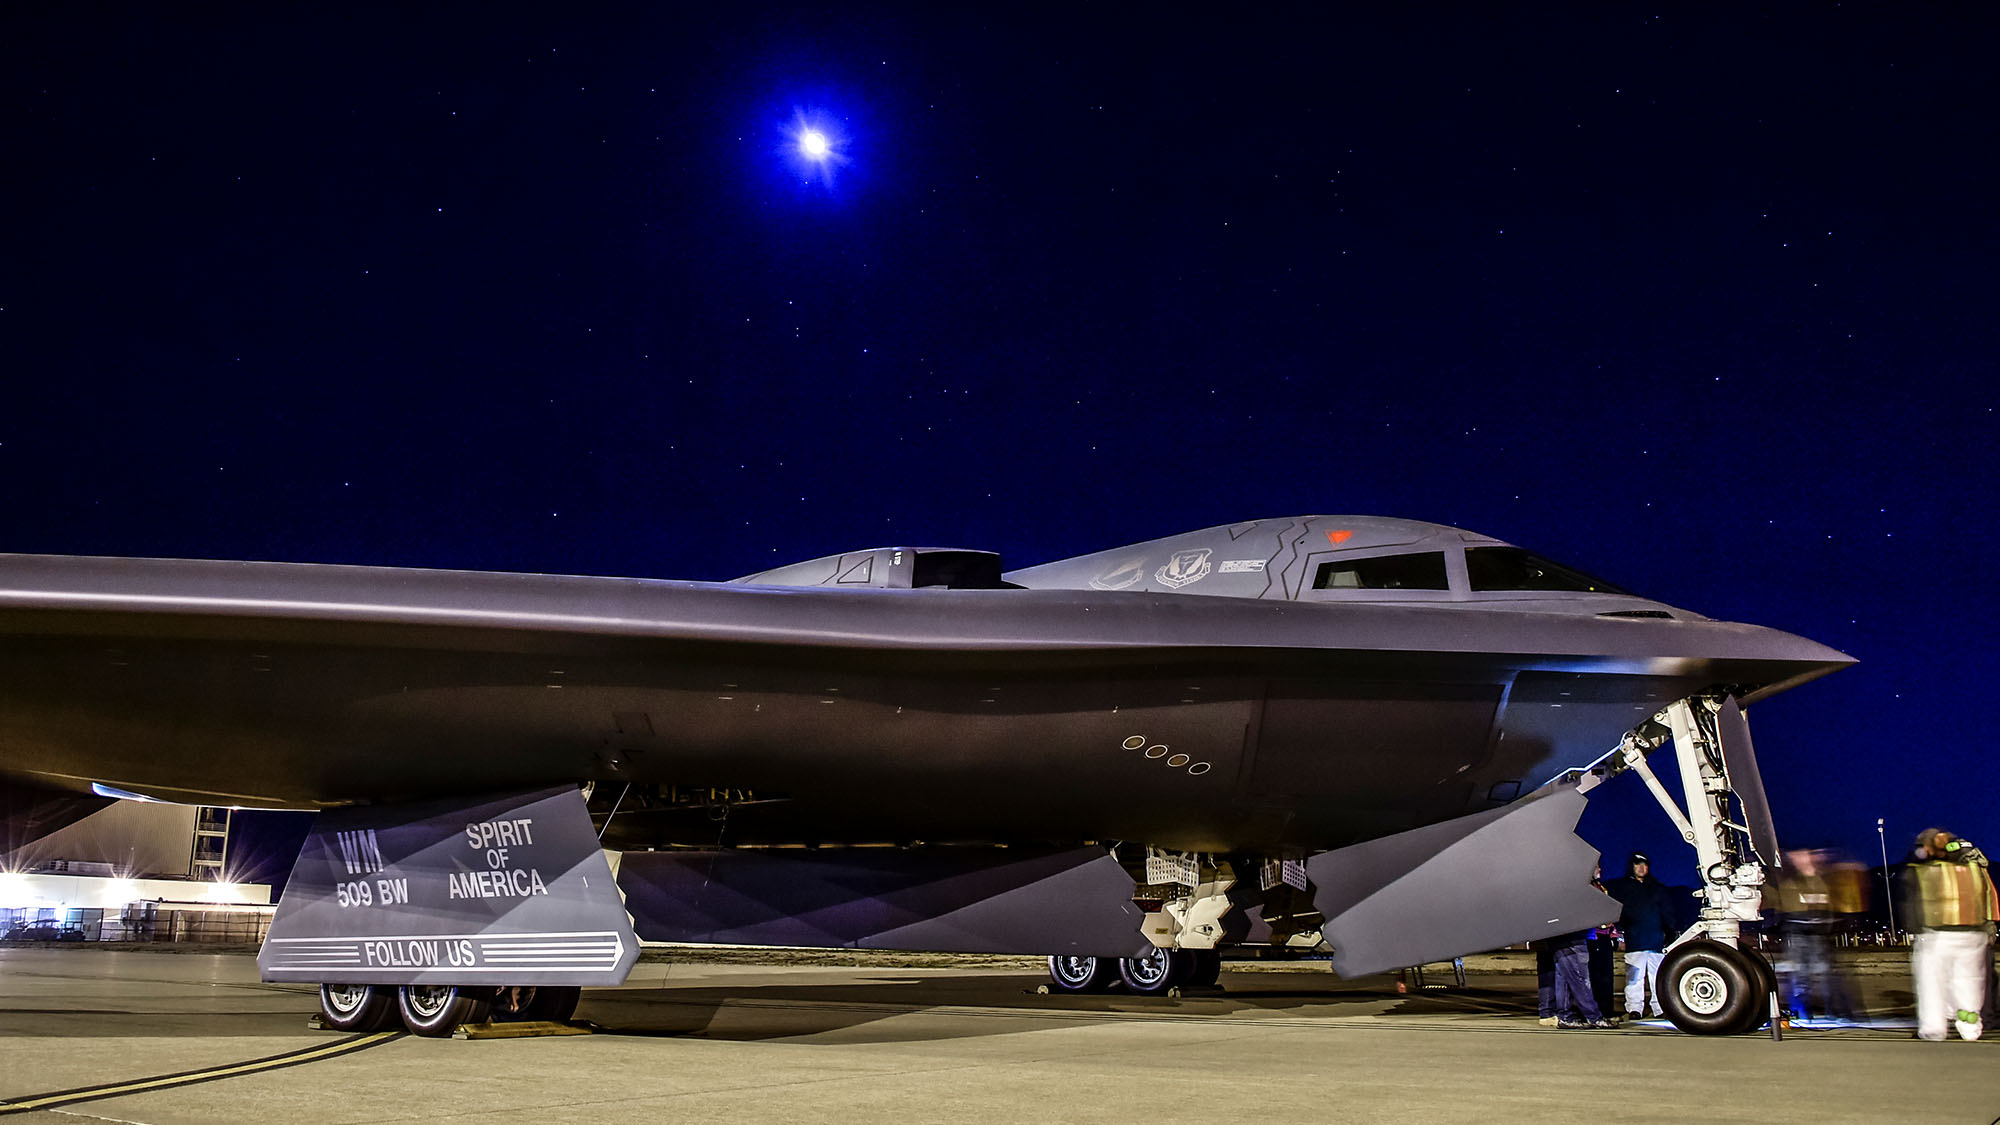 B-2 Spirit Stealth Bomber at night